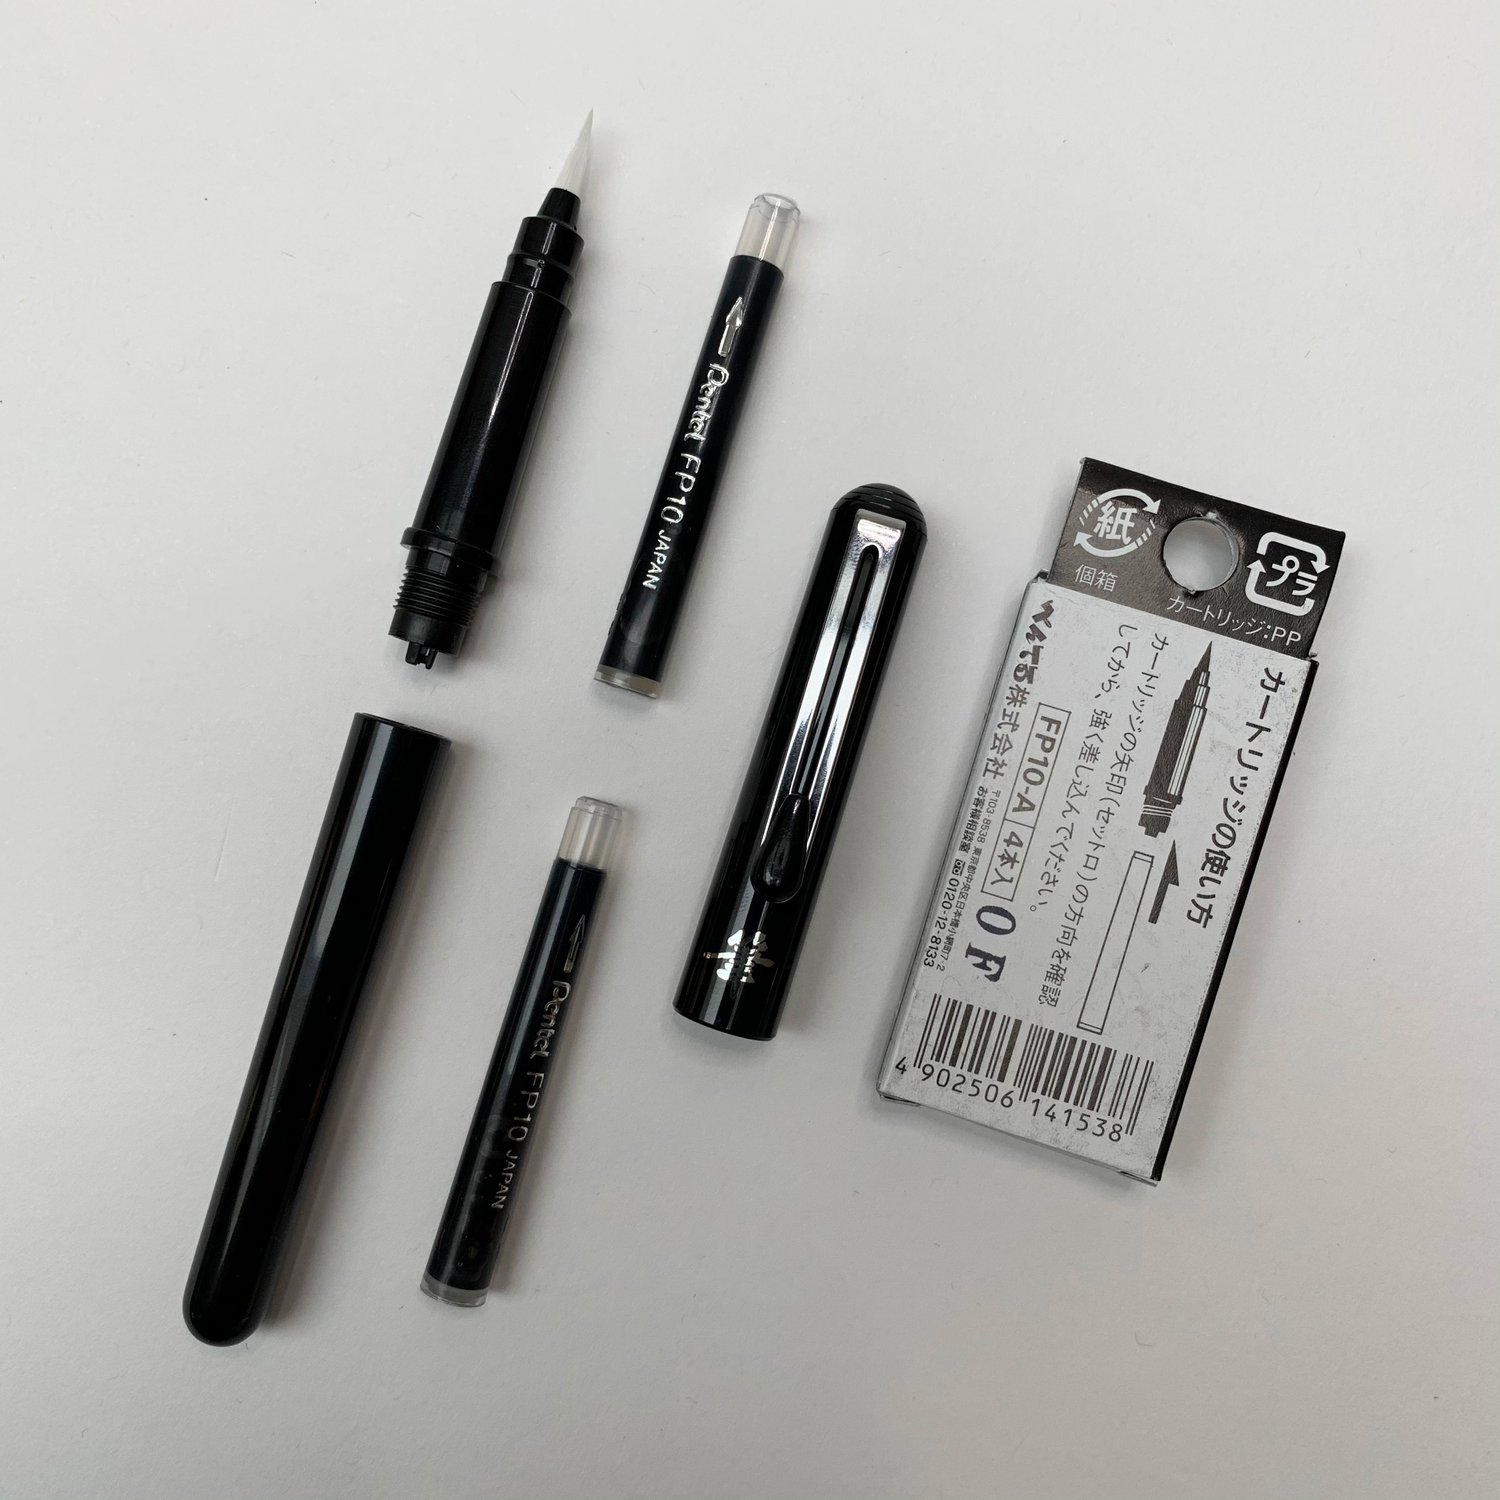 Pentel Cartridge Pen with 2 cartridges